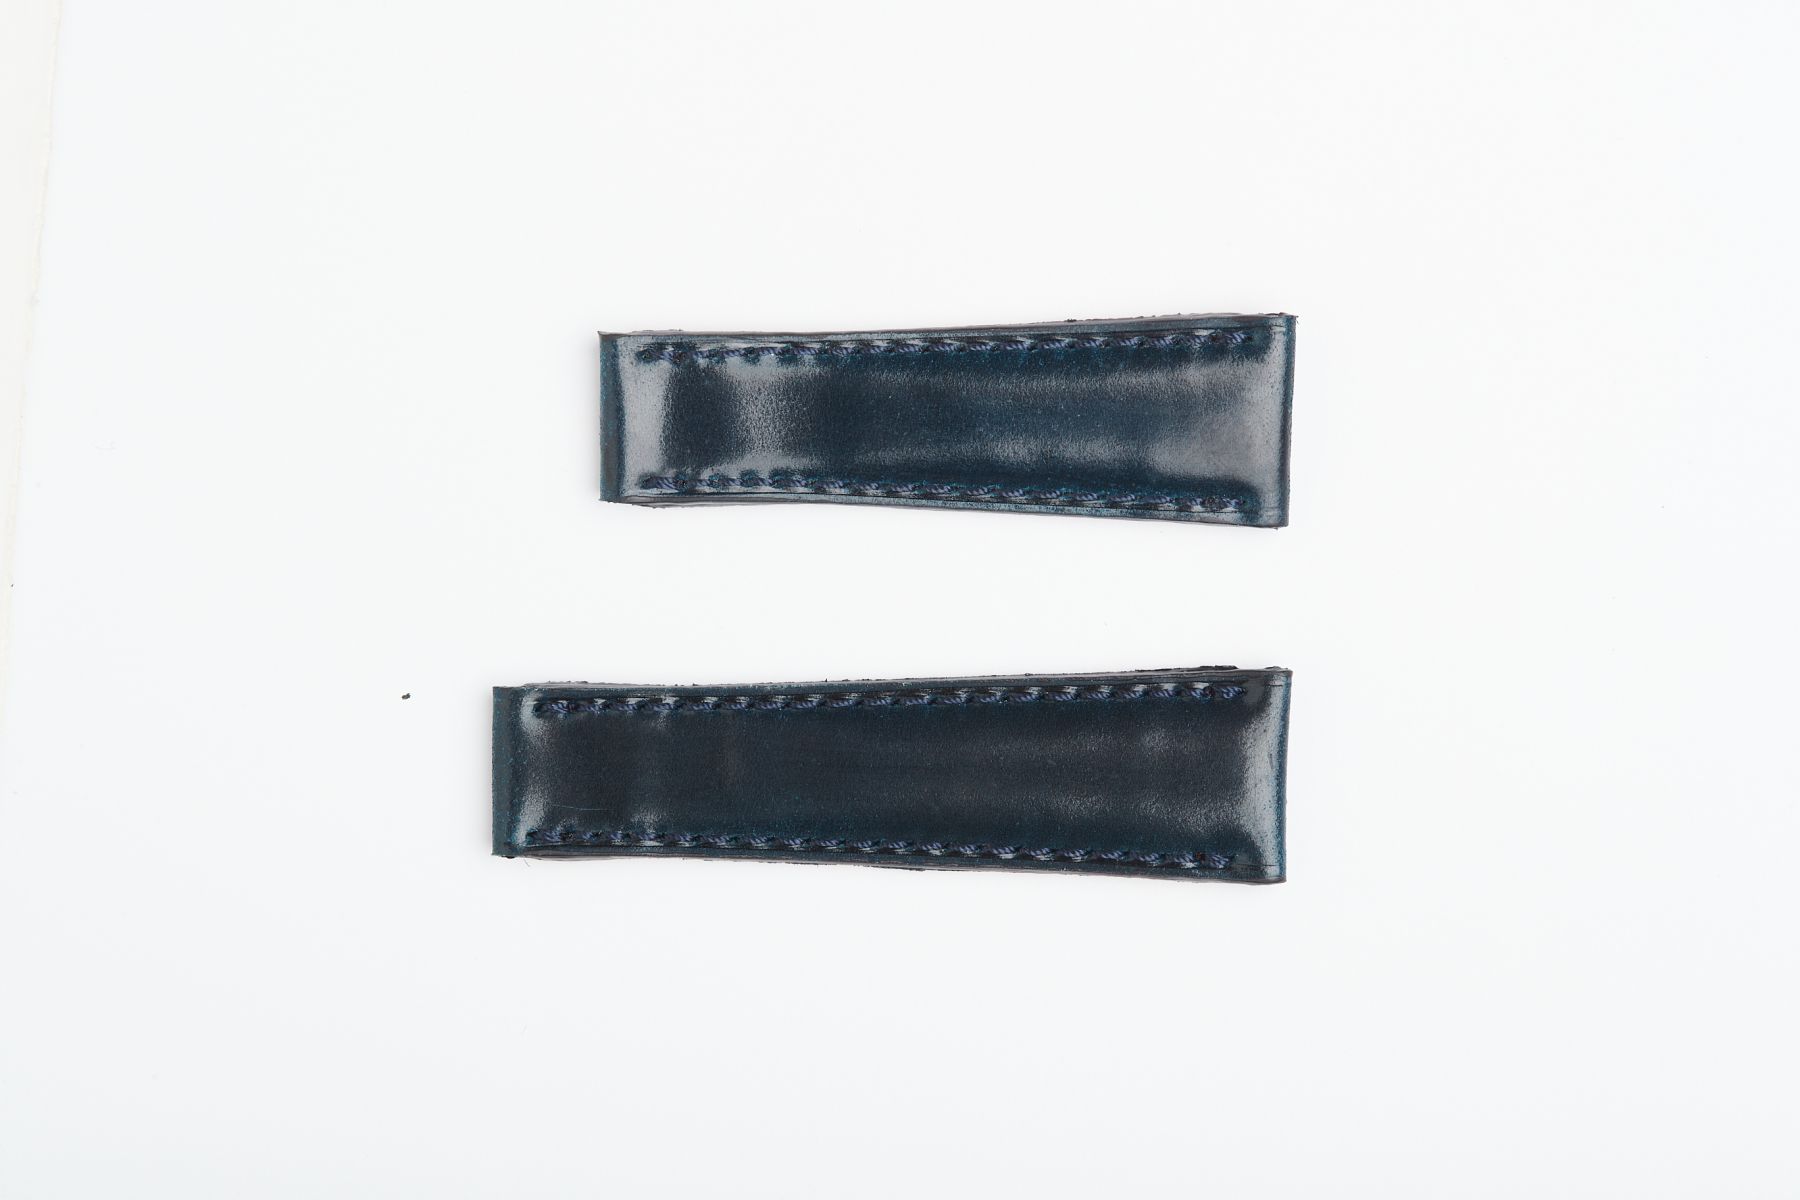 Navy Blue Shell Cordovan (Horween) leather strap 20mm / Rolex Daytona style